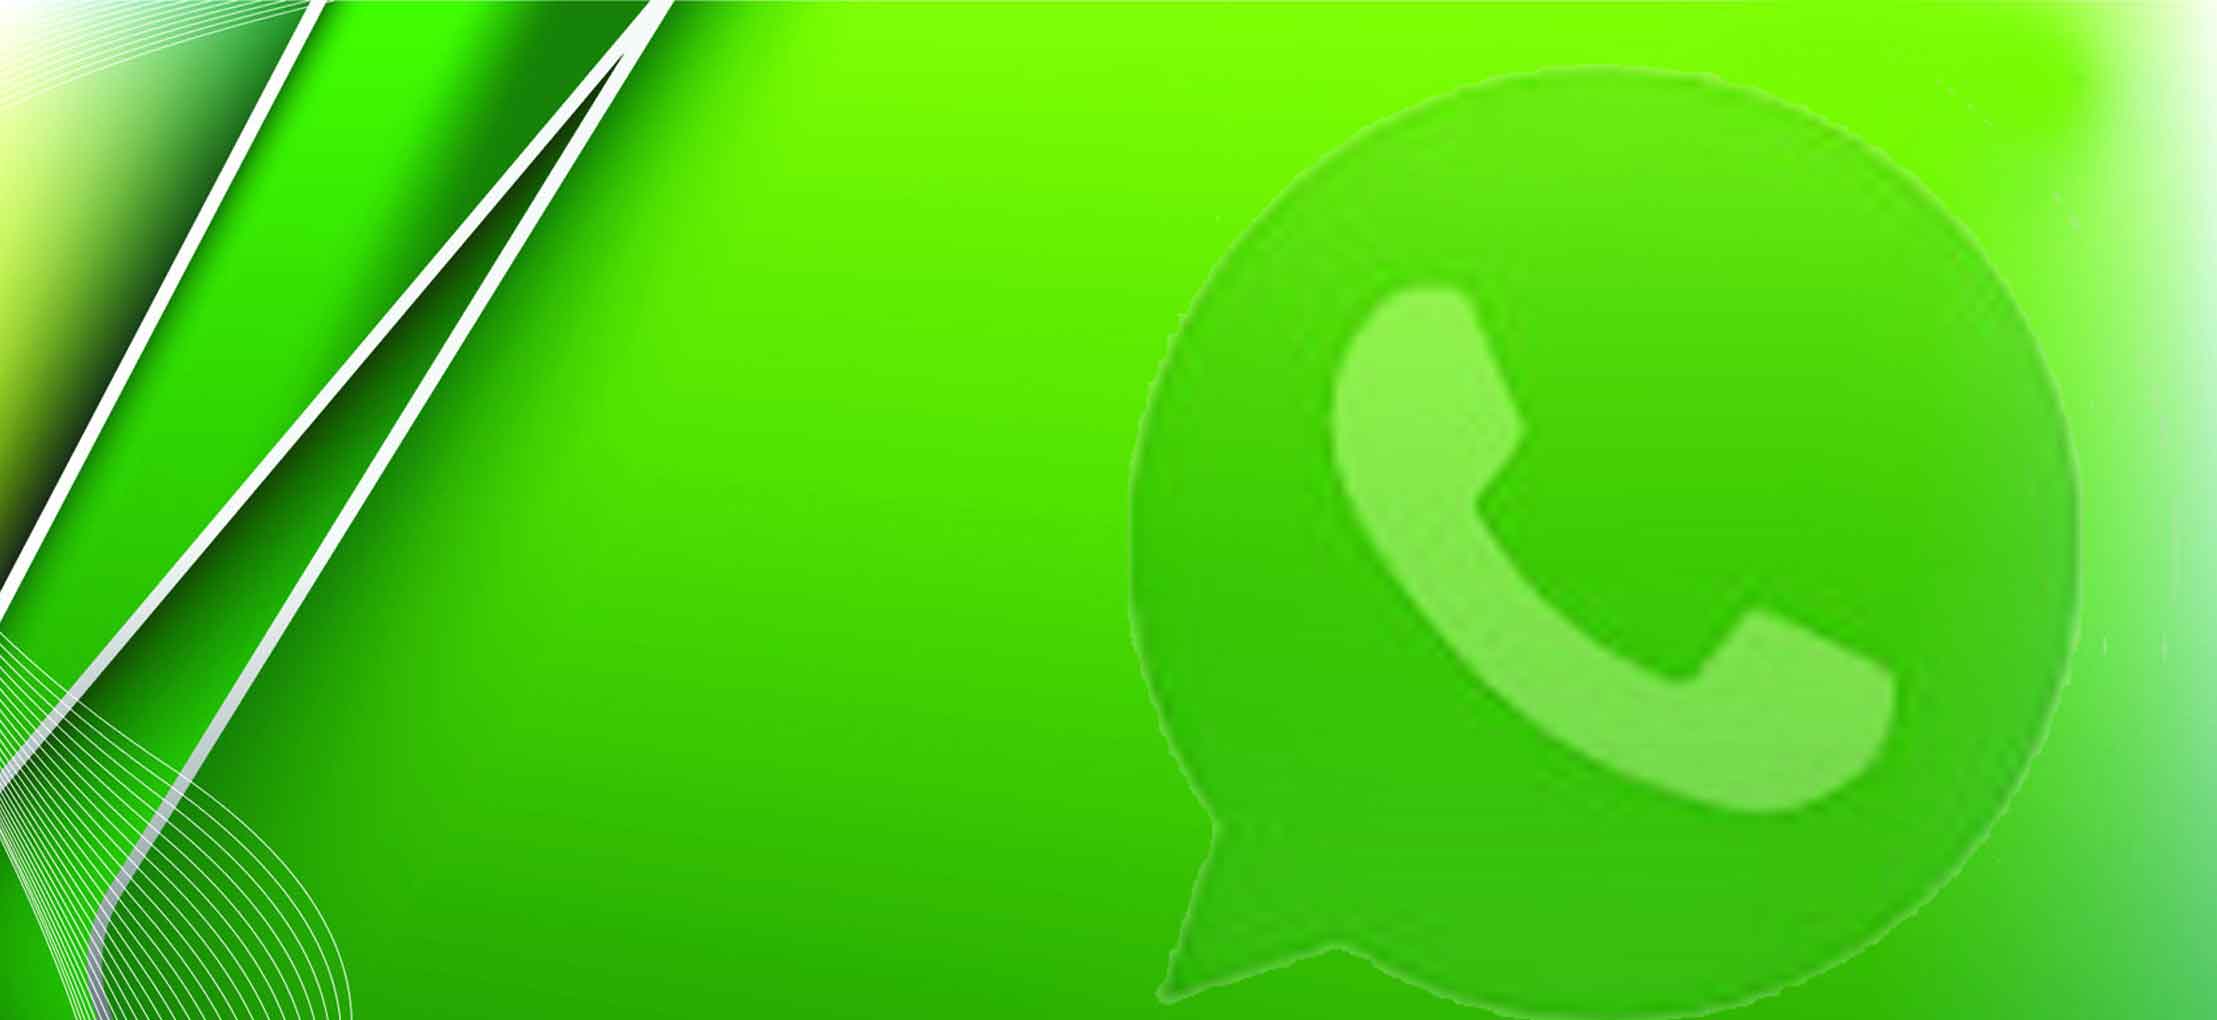 Best Whatsapp Group Link